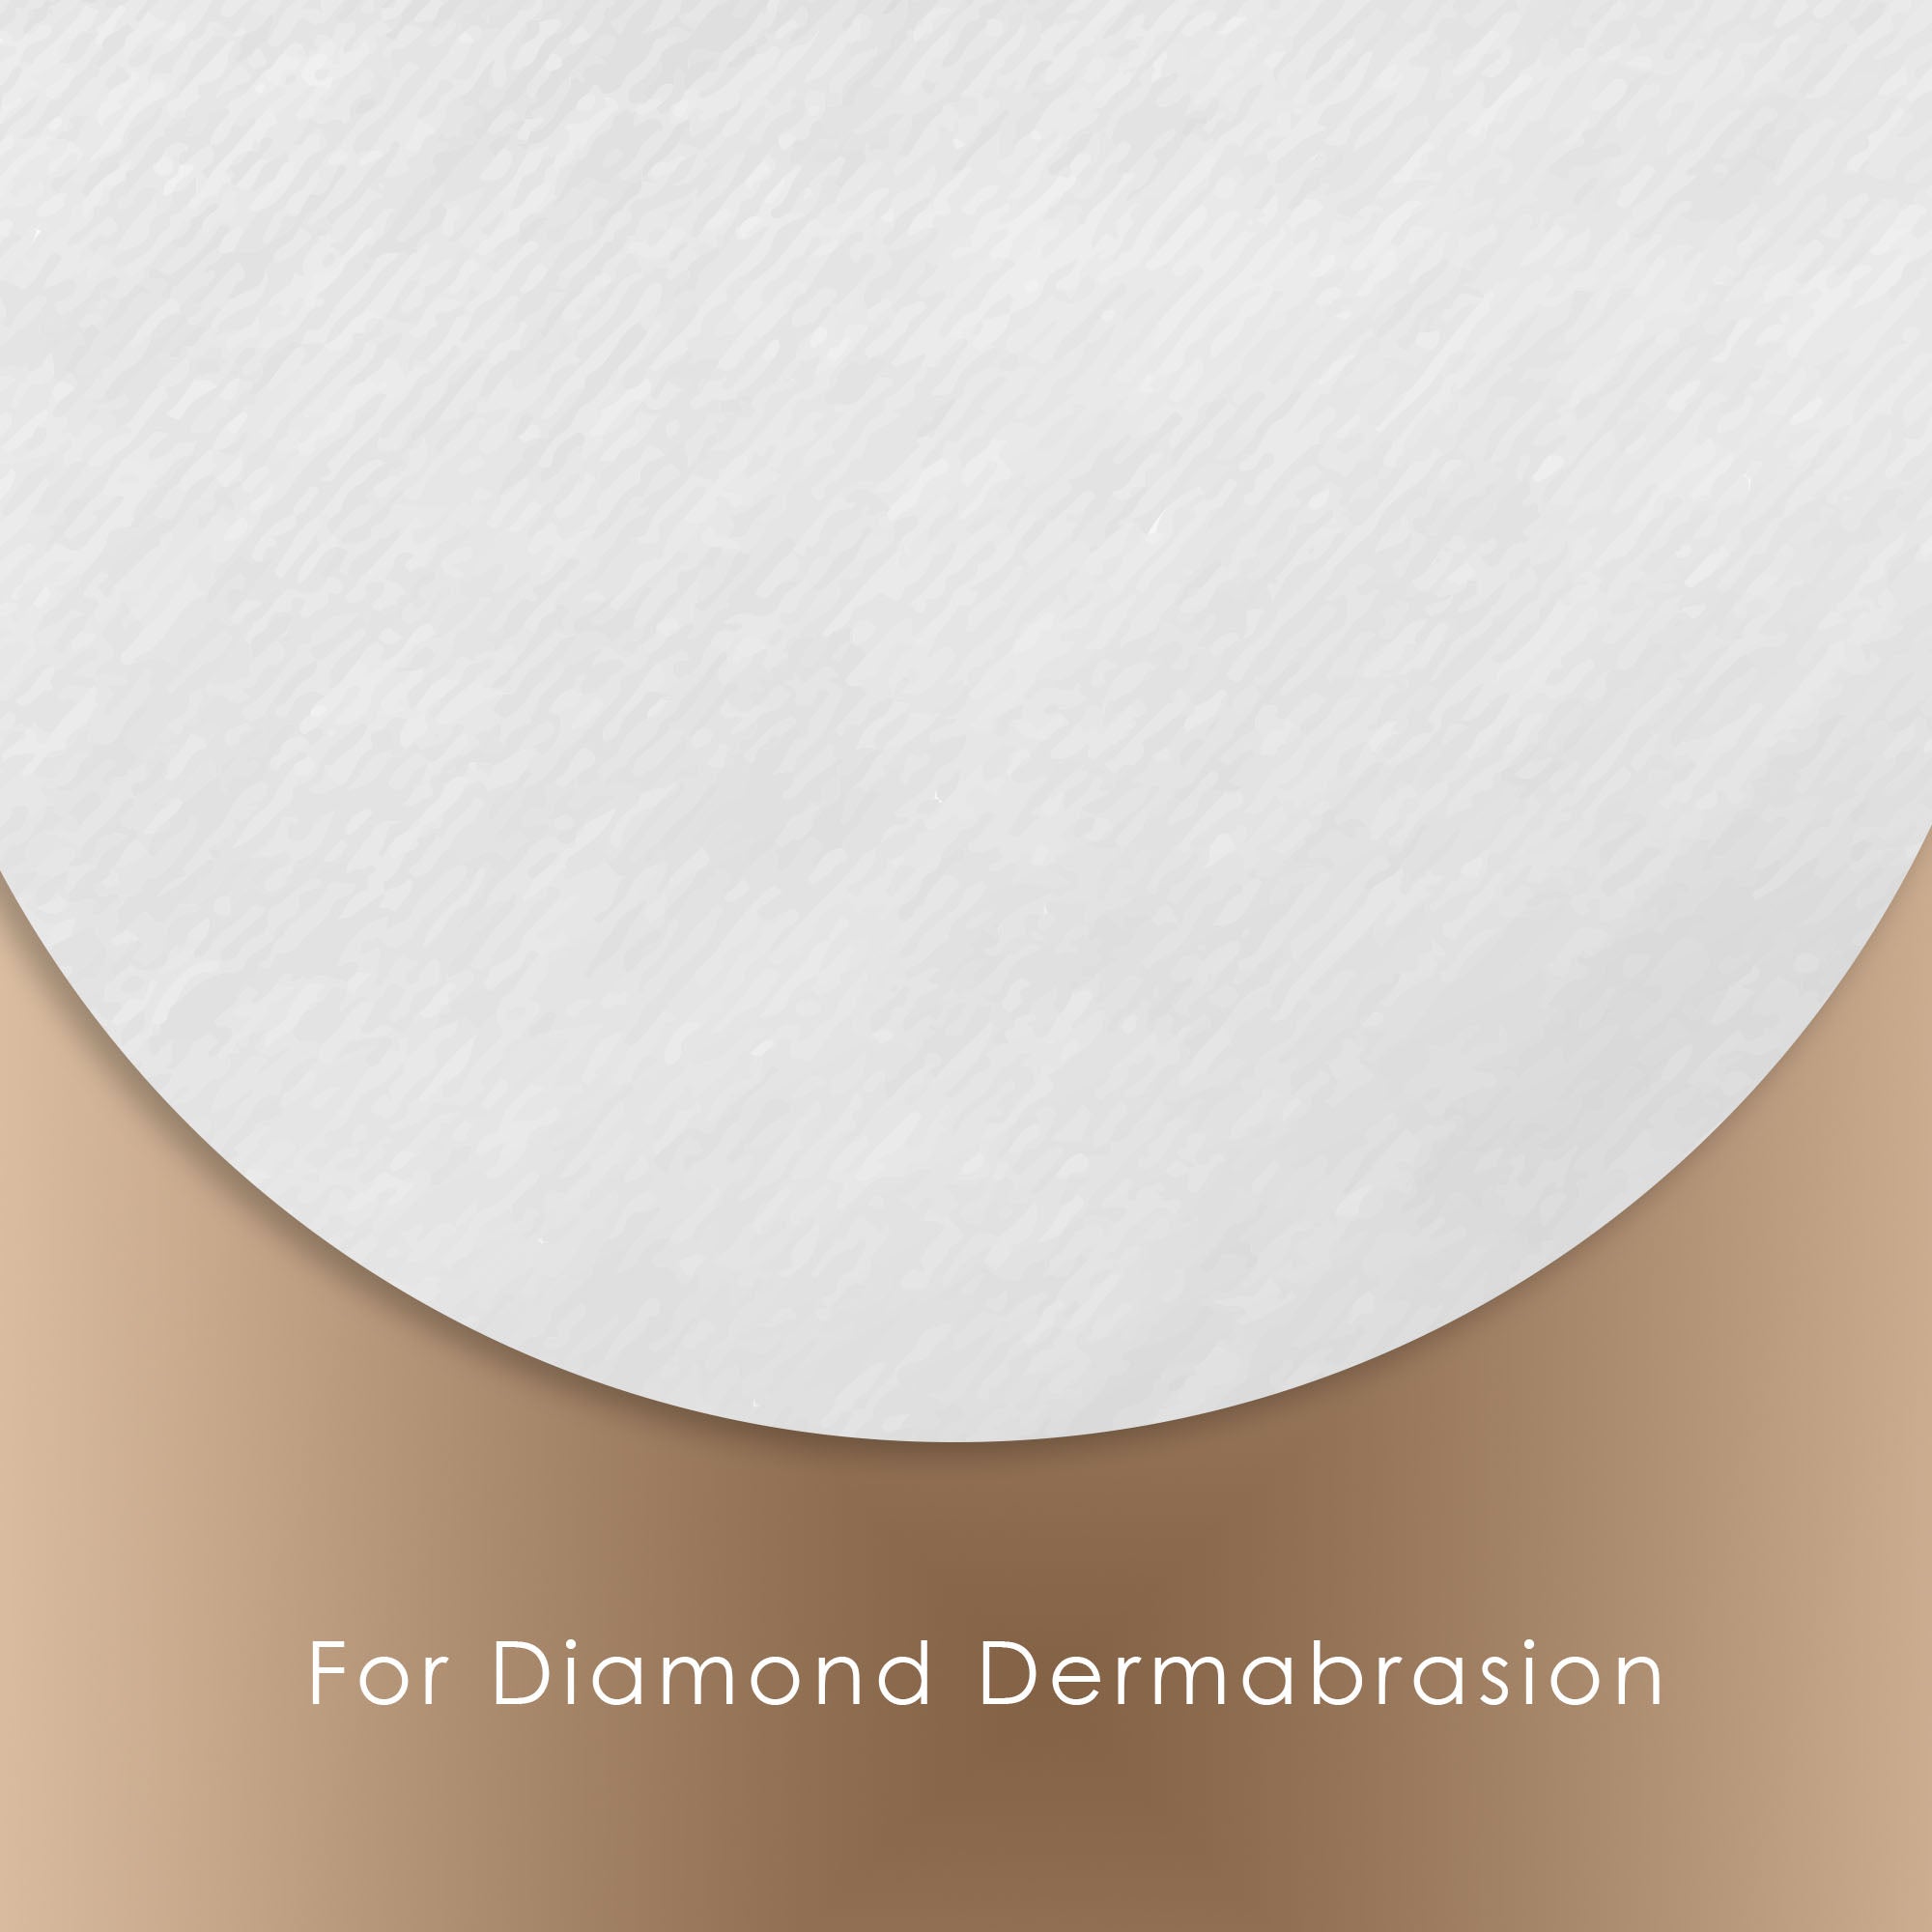 500pcs Cotton Filter (11mm) For Diamond Dermabrasion Peeling Machine Parts